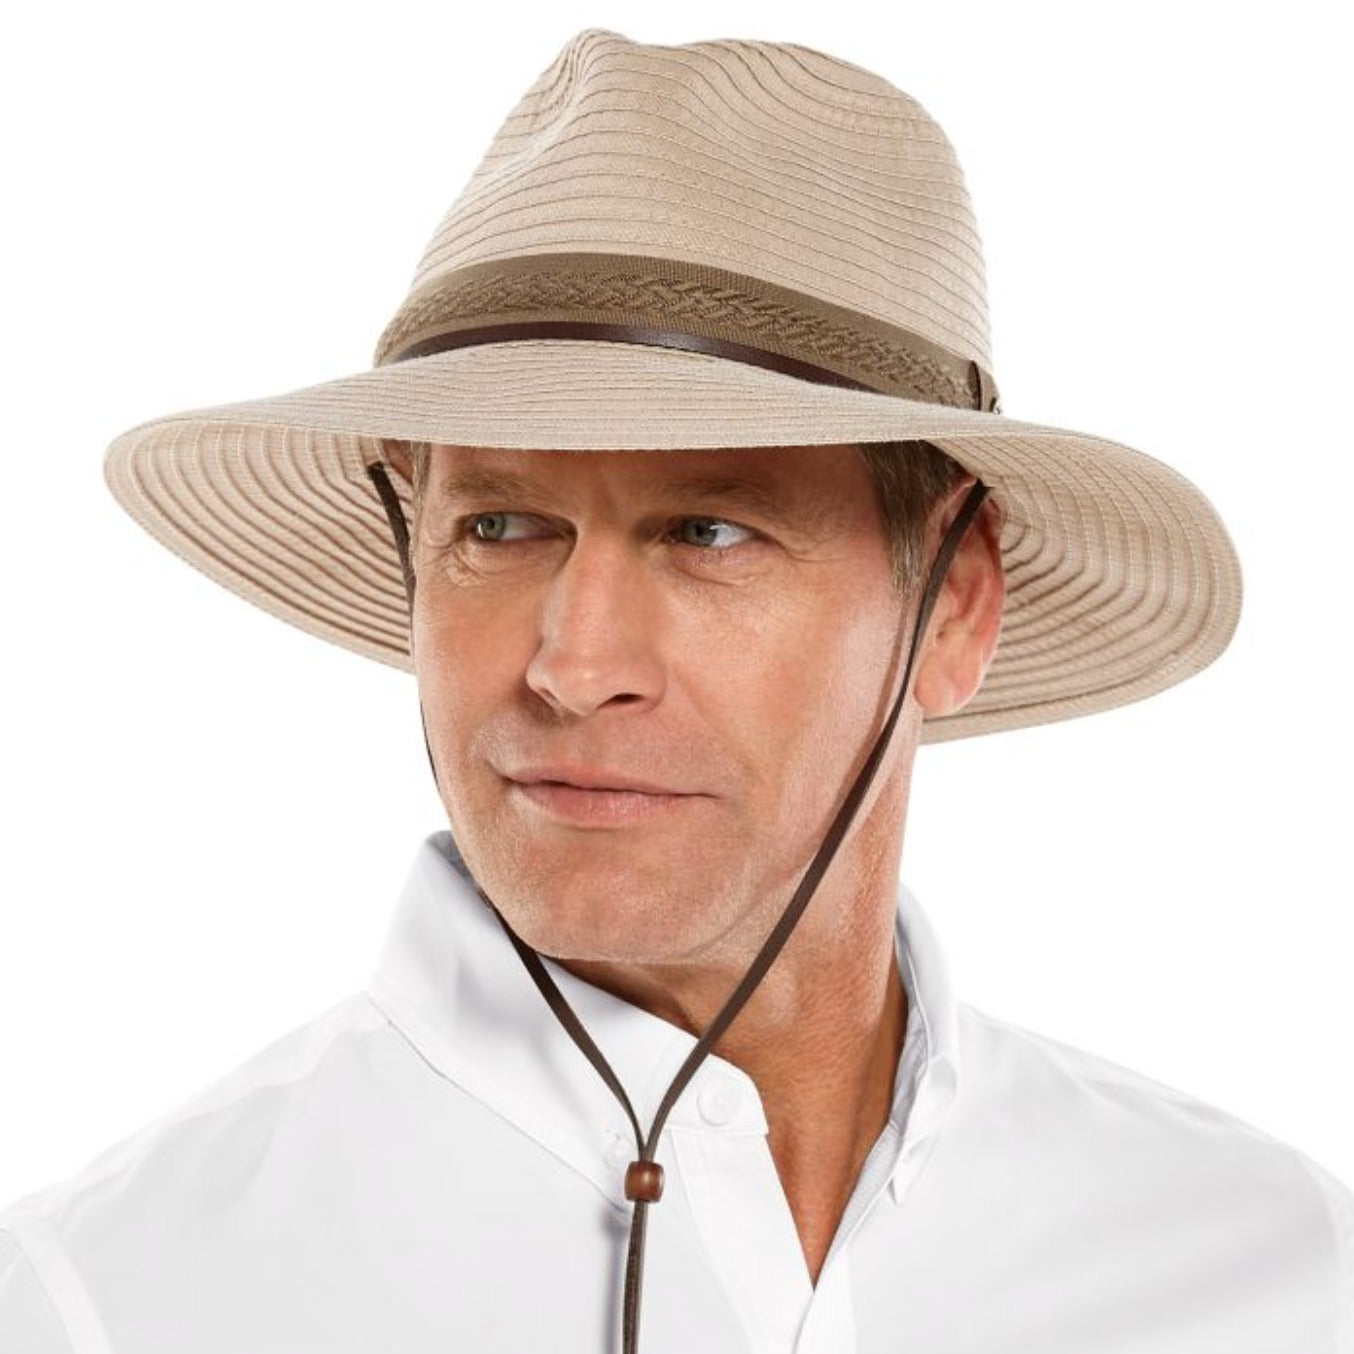 Coolibar Men's Galileo Packable Travel Hat UPF 50+ - Khaki